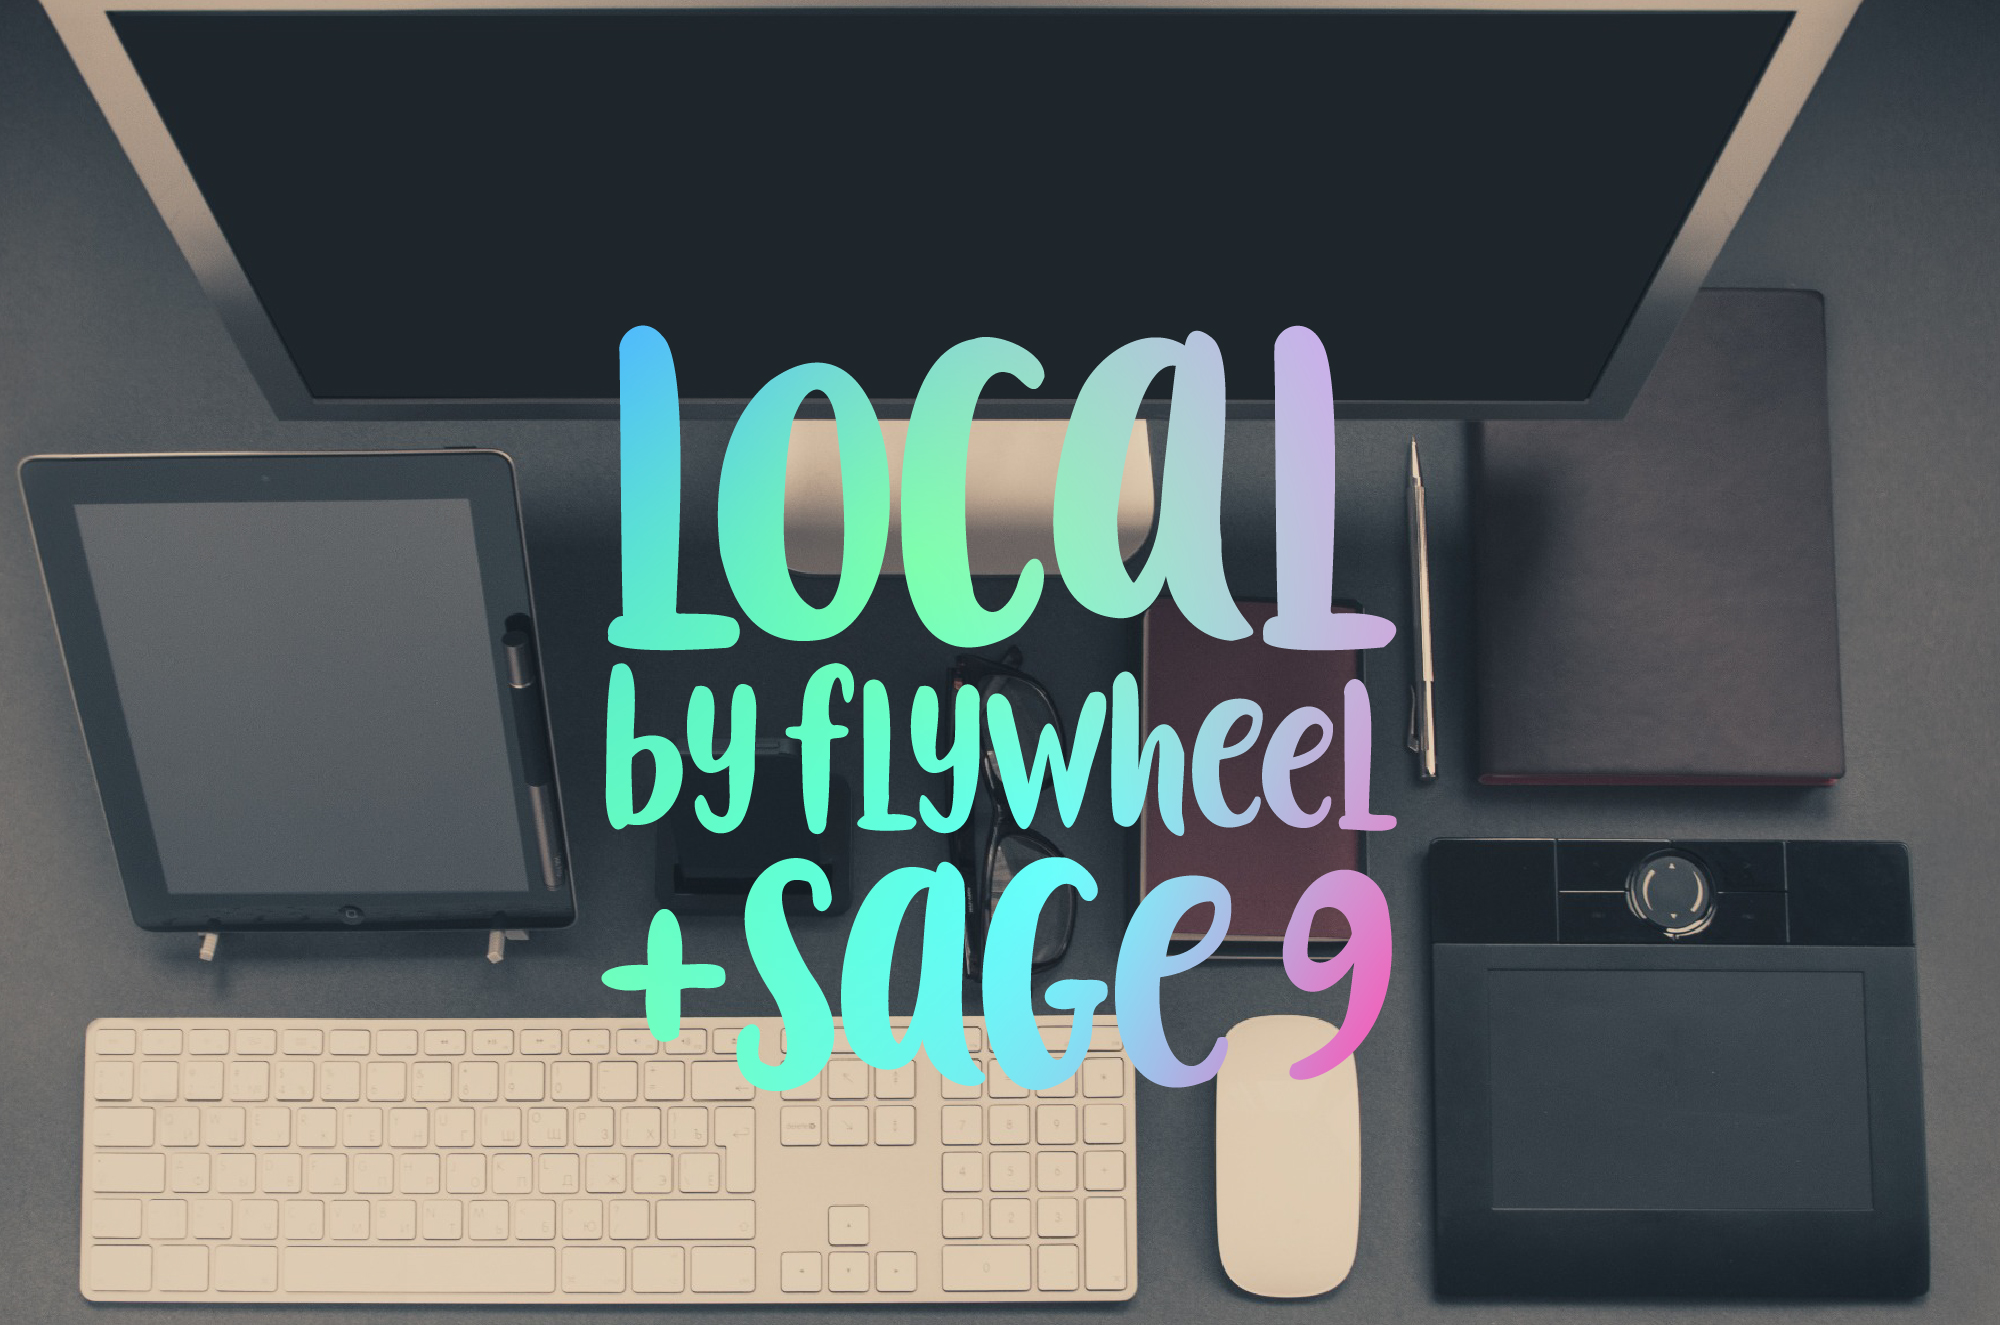 Localbyflywheel+sage9